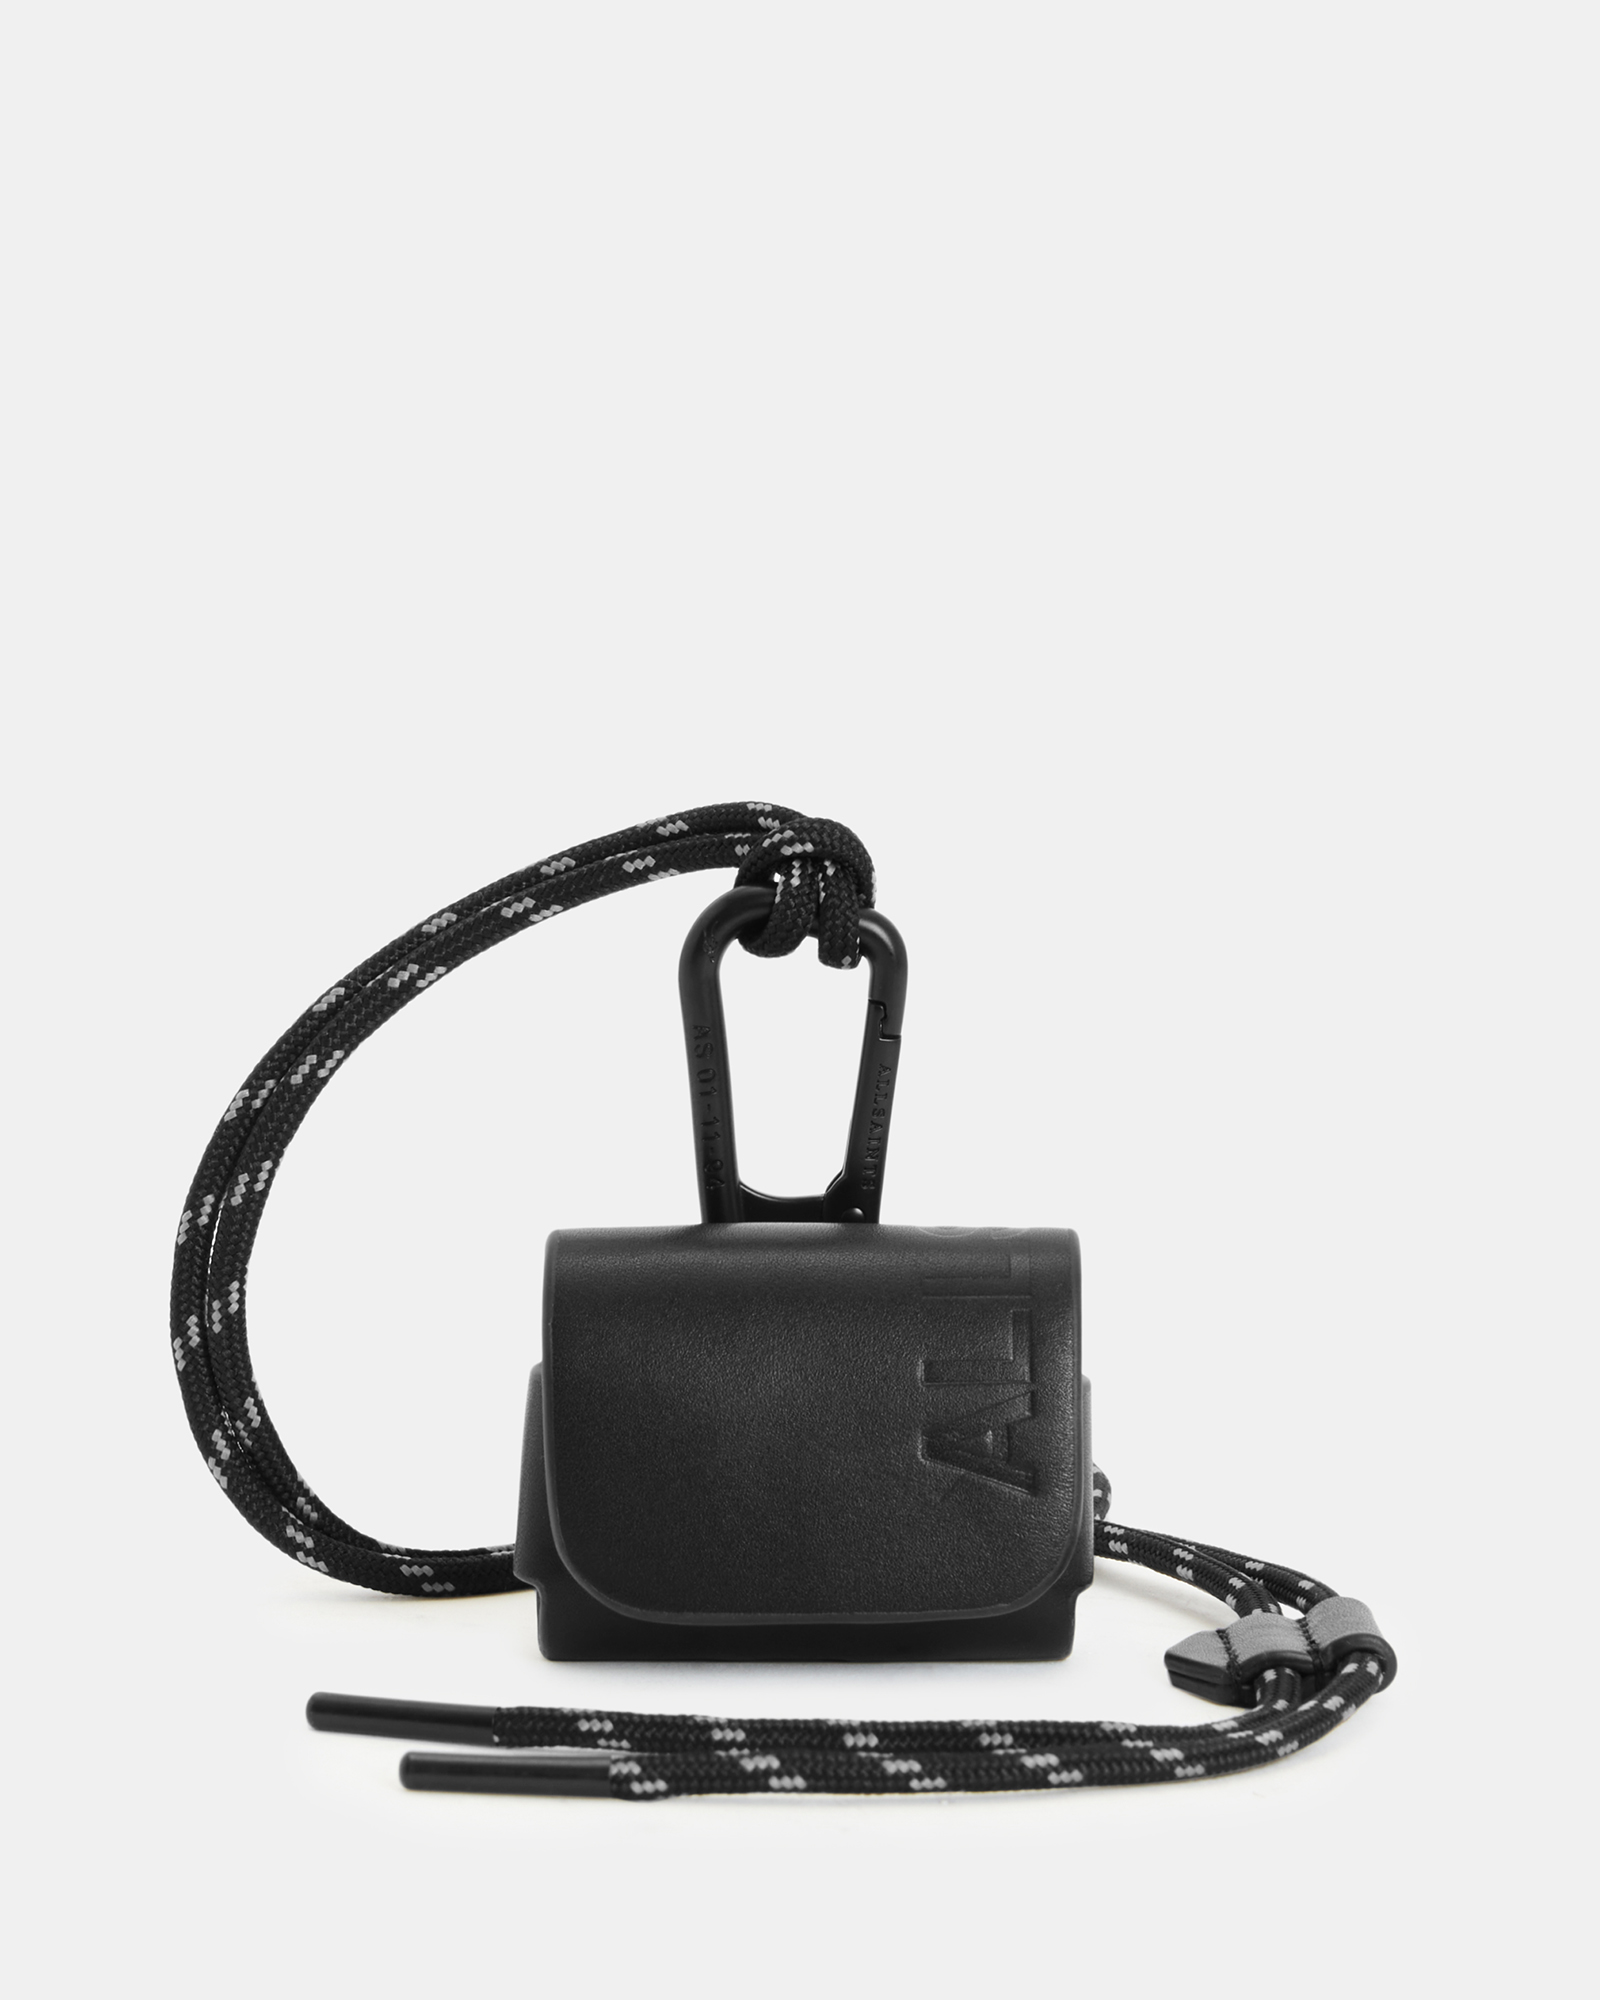 AllSaints Women's Airpod Leather Case, Black